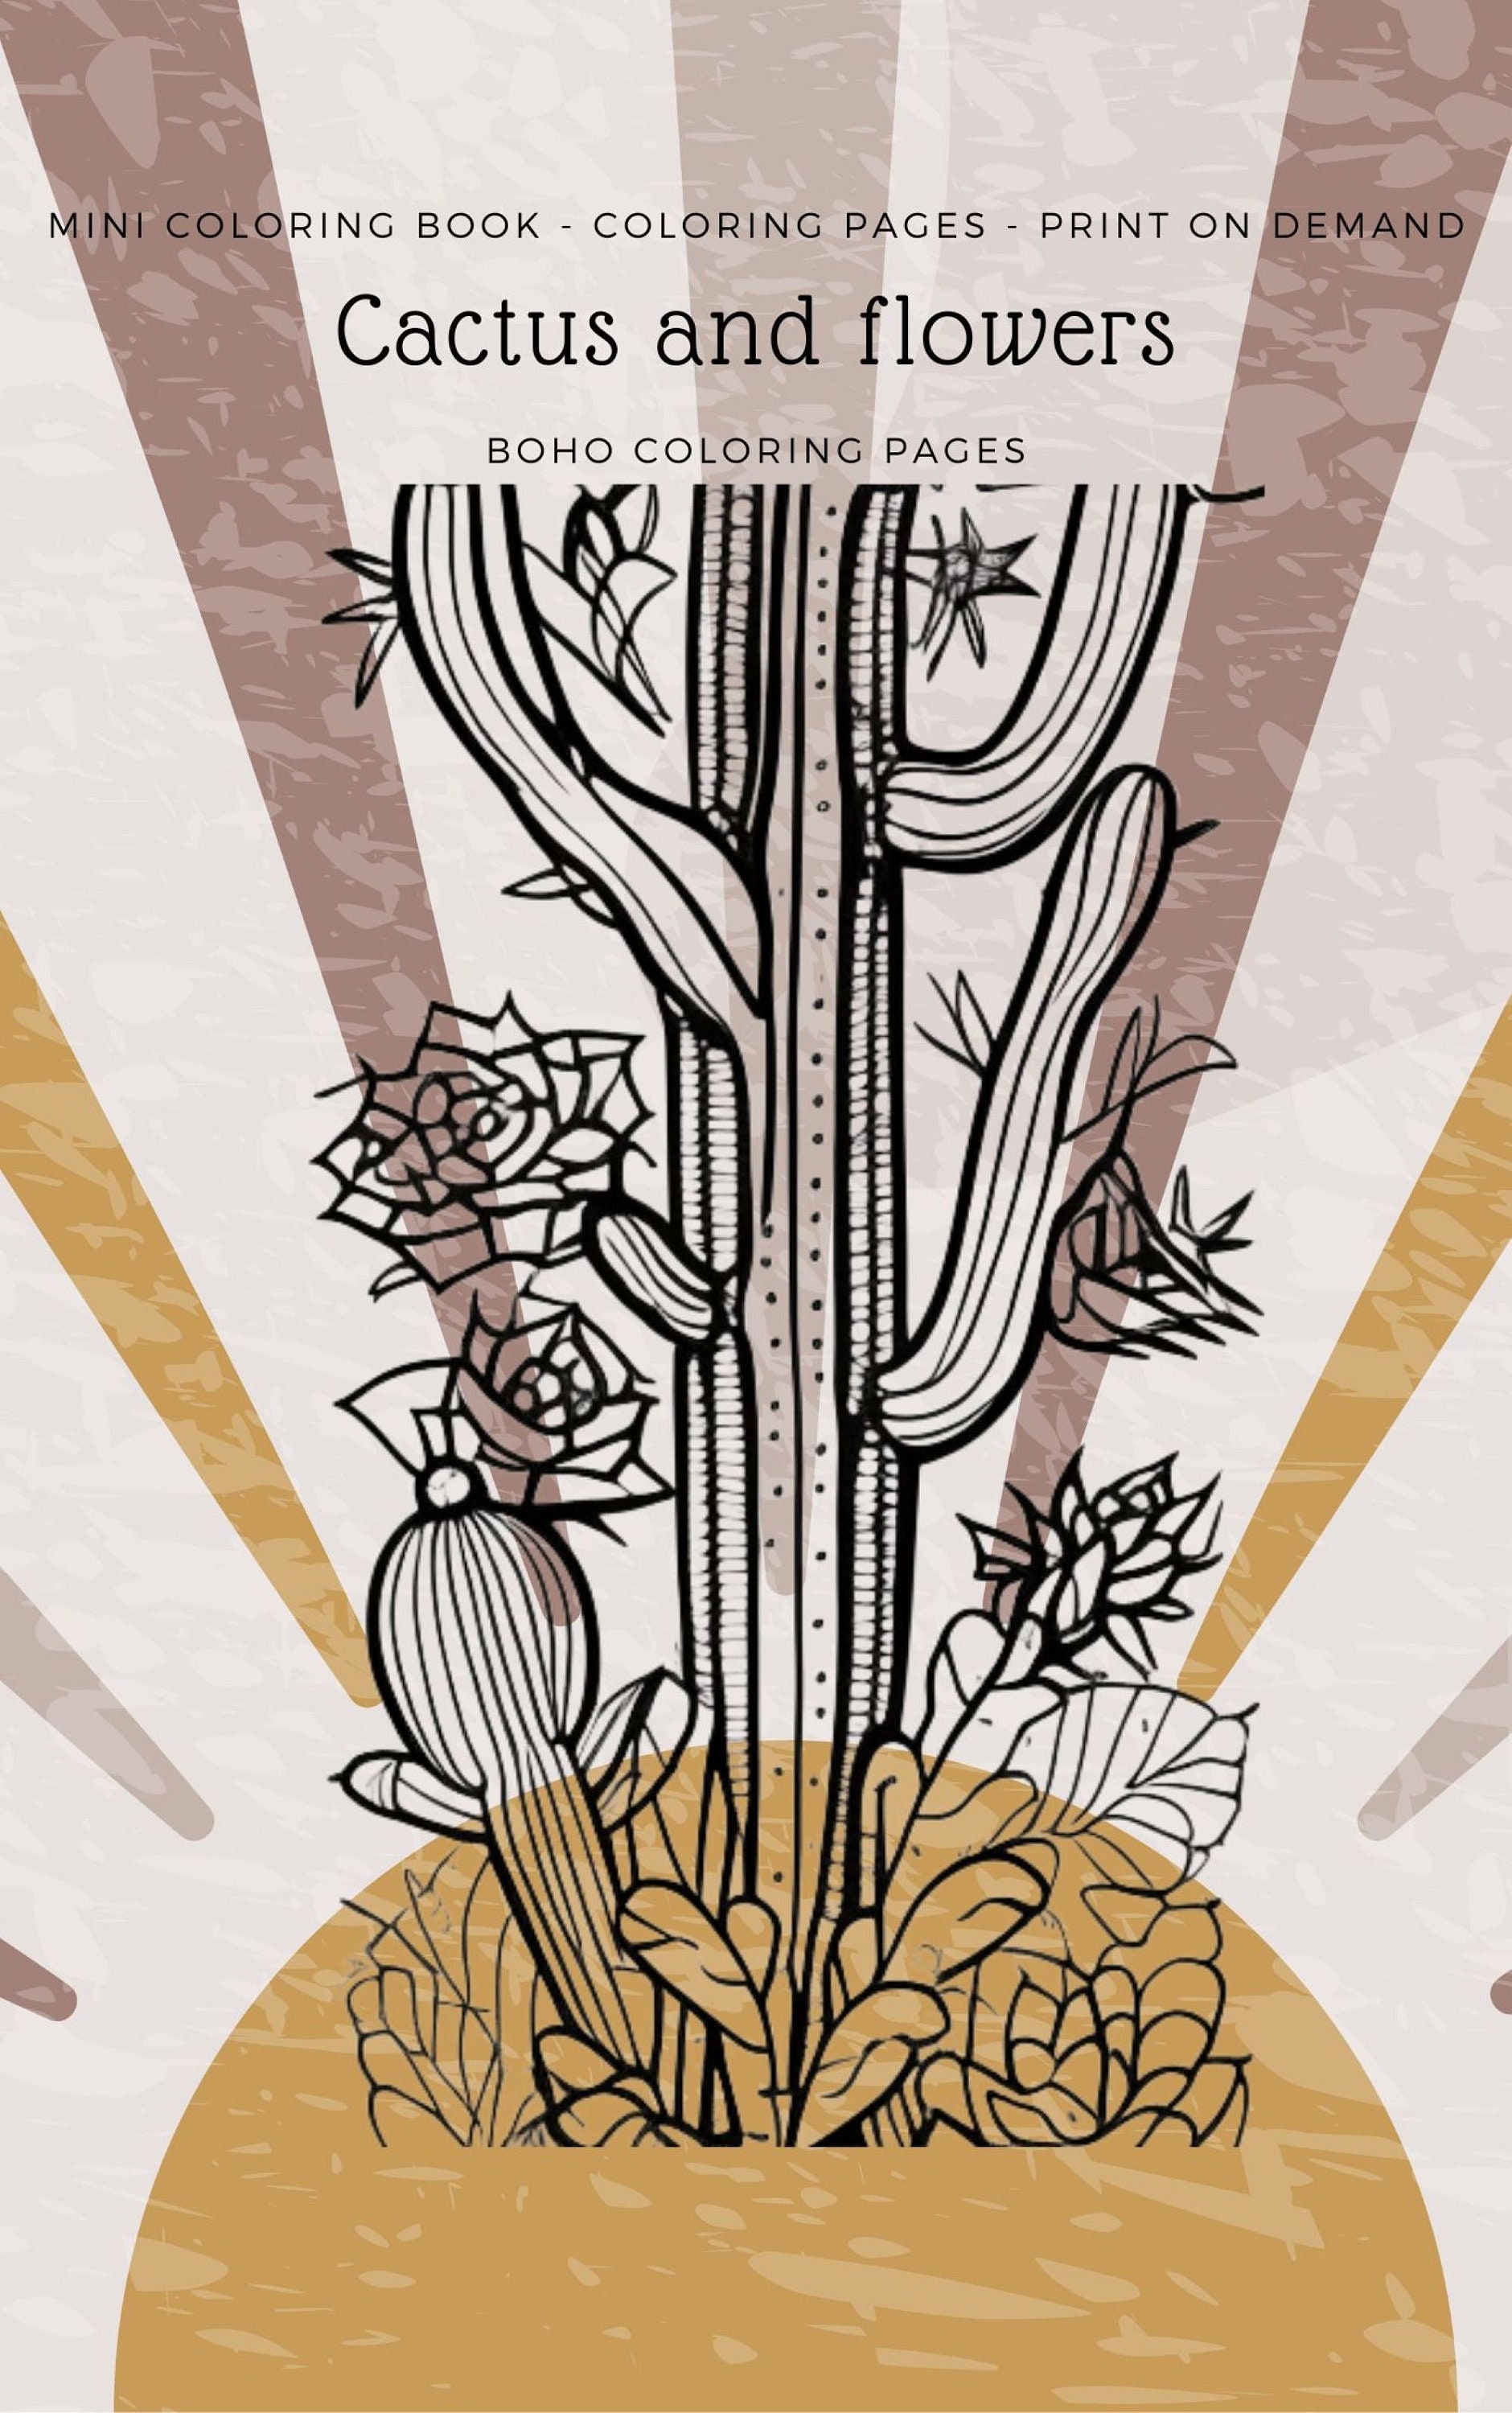 Boho Mini Coloring Books, Cactus, Cacti and Flowers, Desert, Print